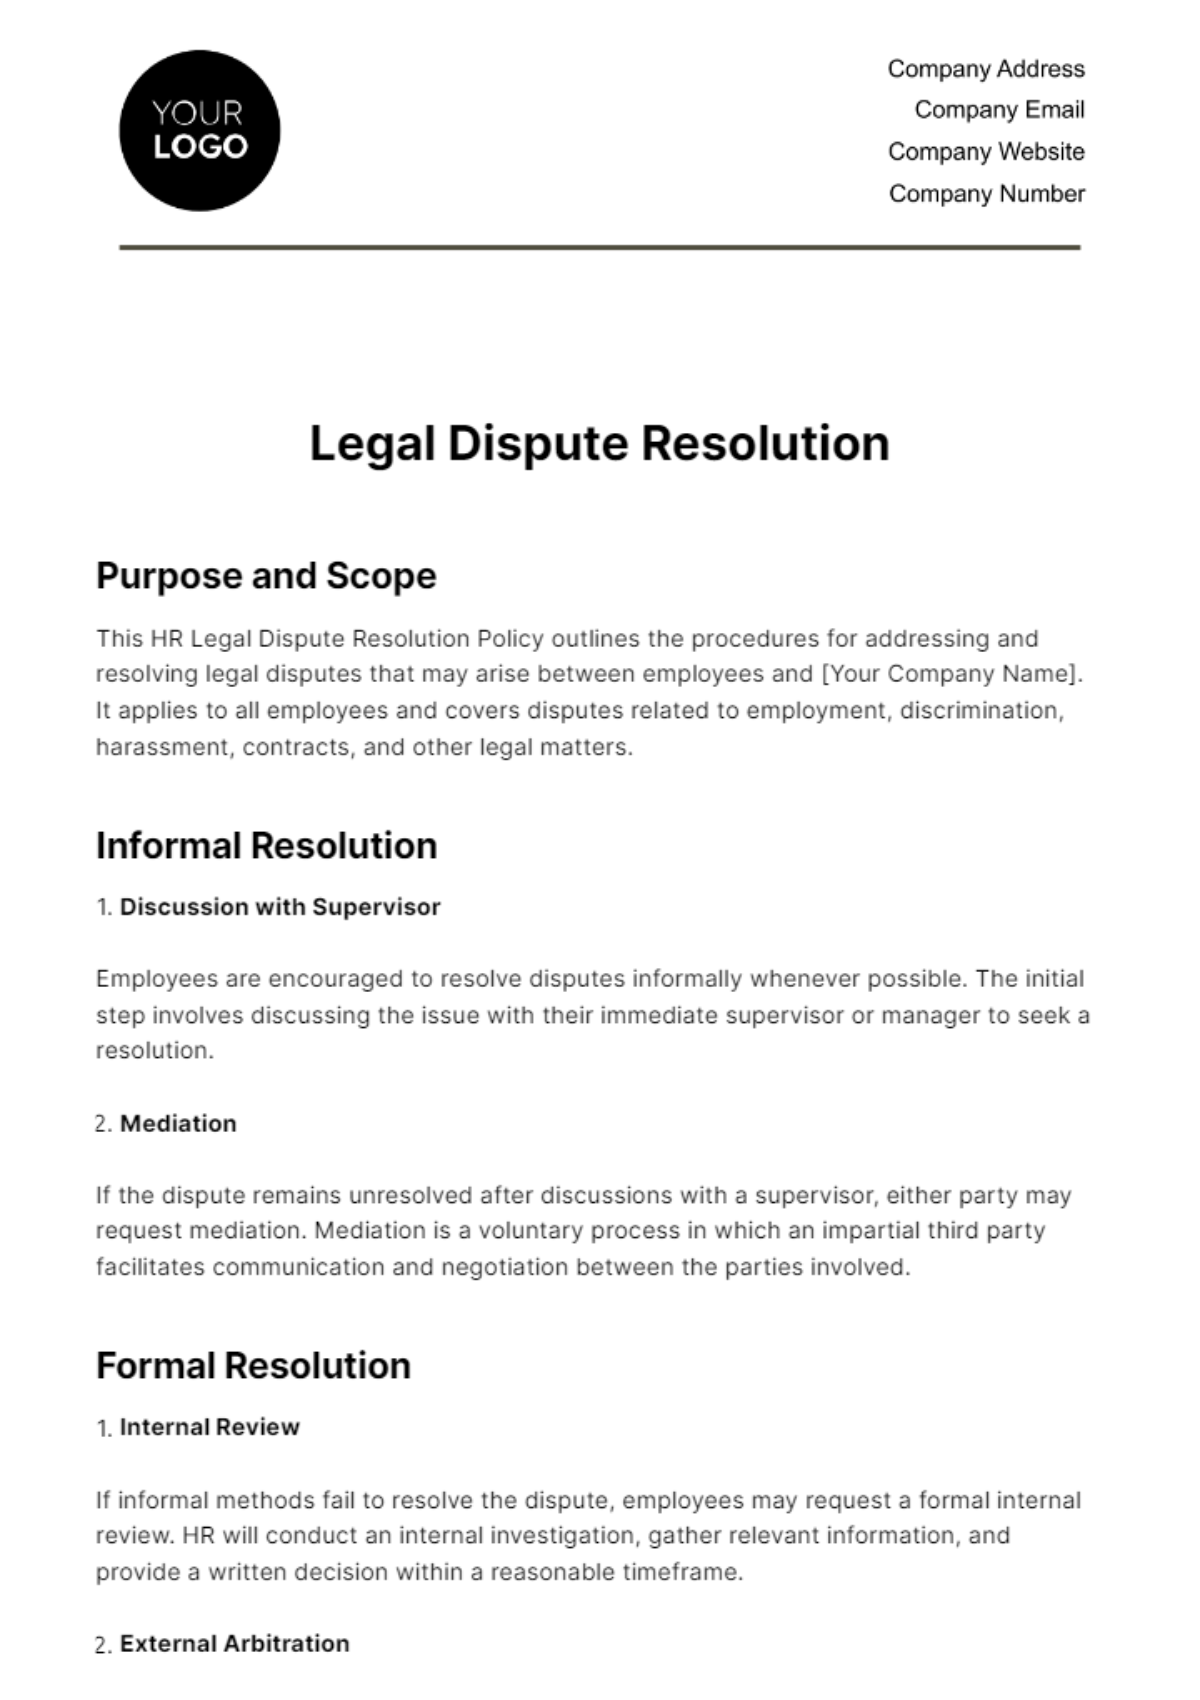 Free Legal Dispute Resolution HR Template